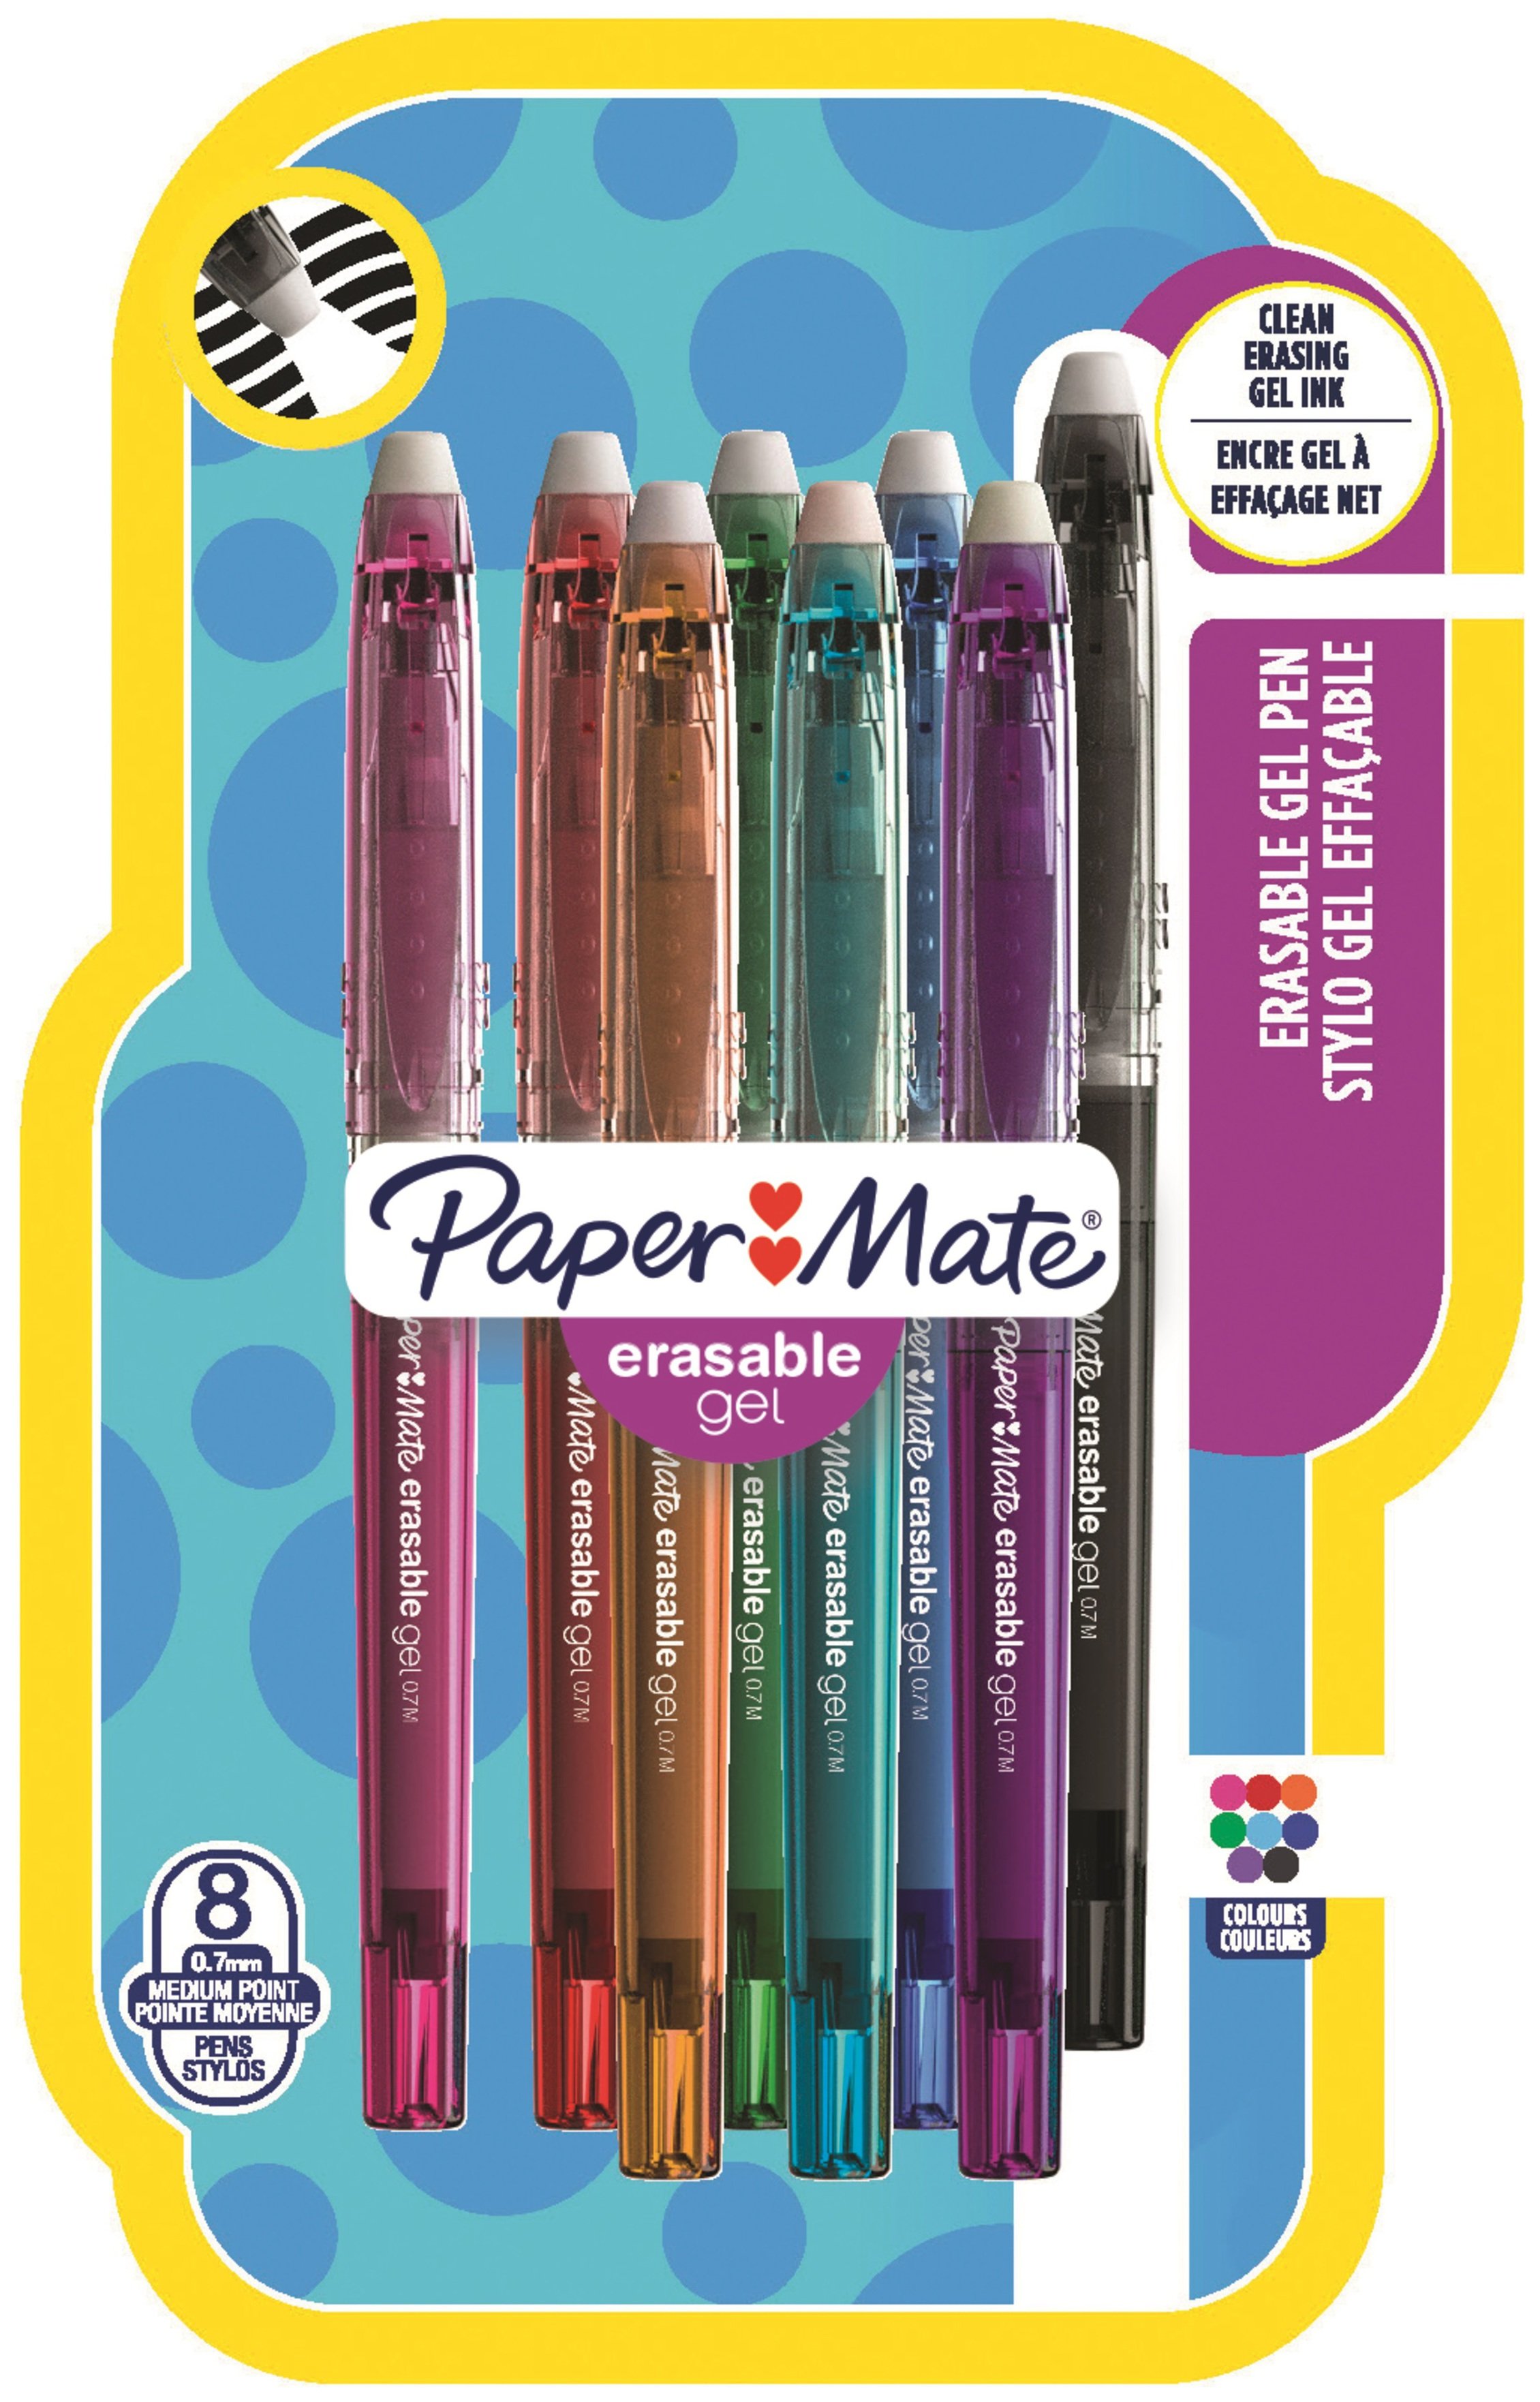 Paper Mate Erasable Gel Pen review